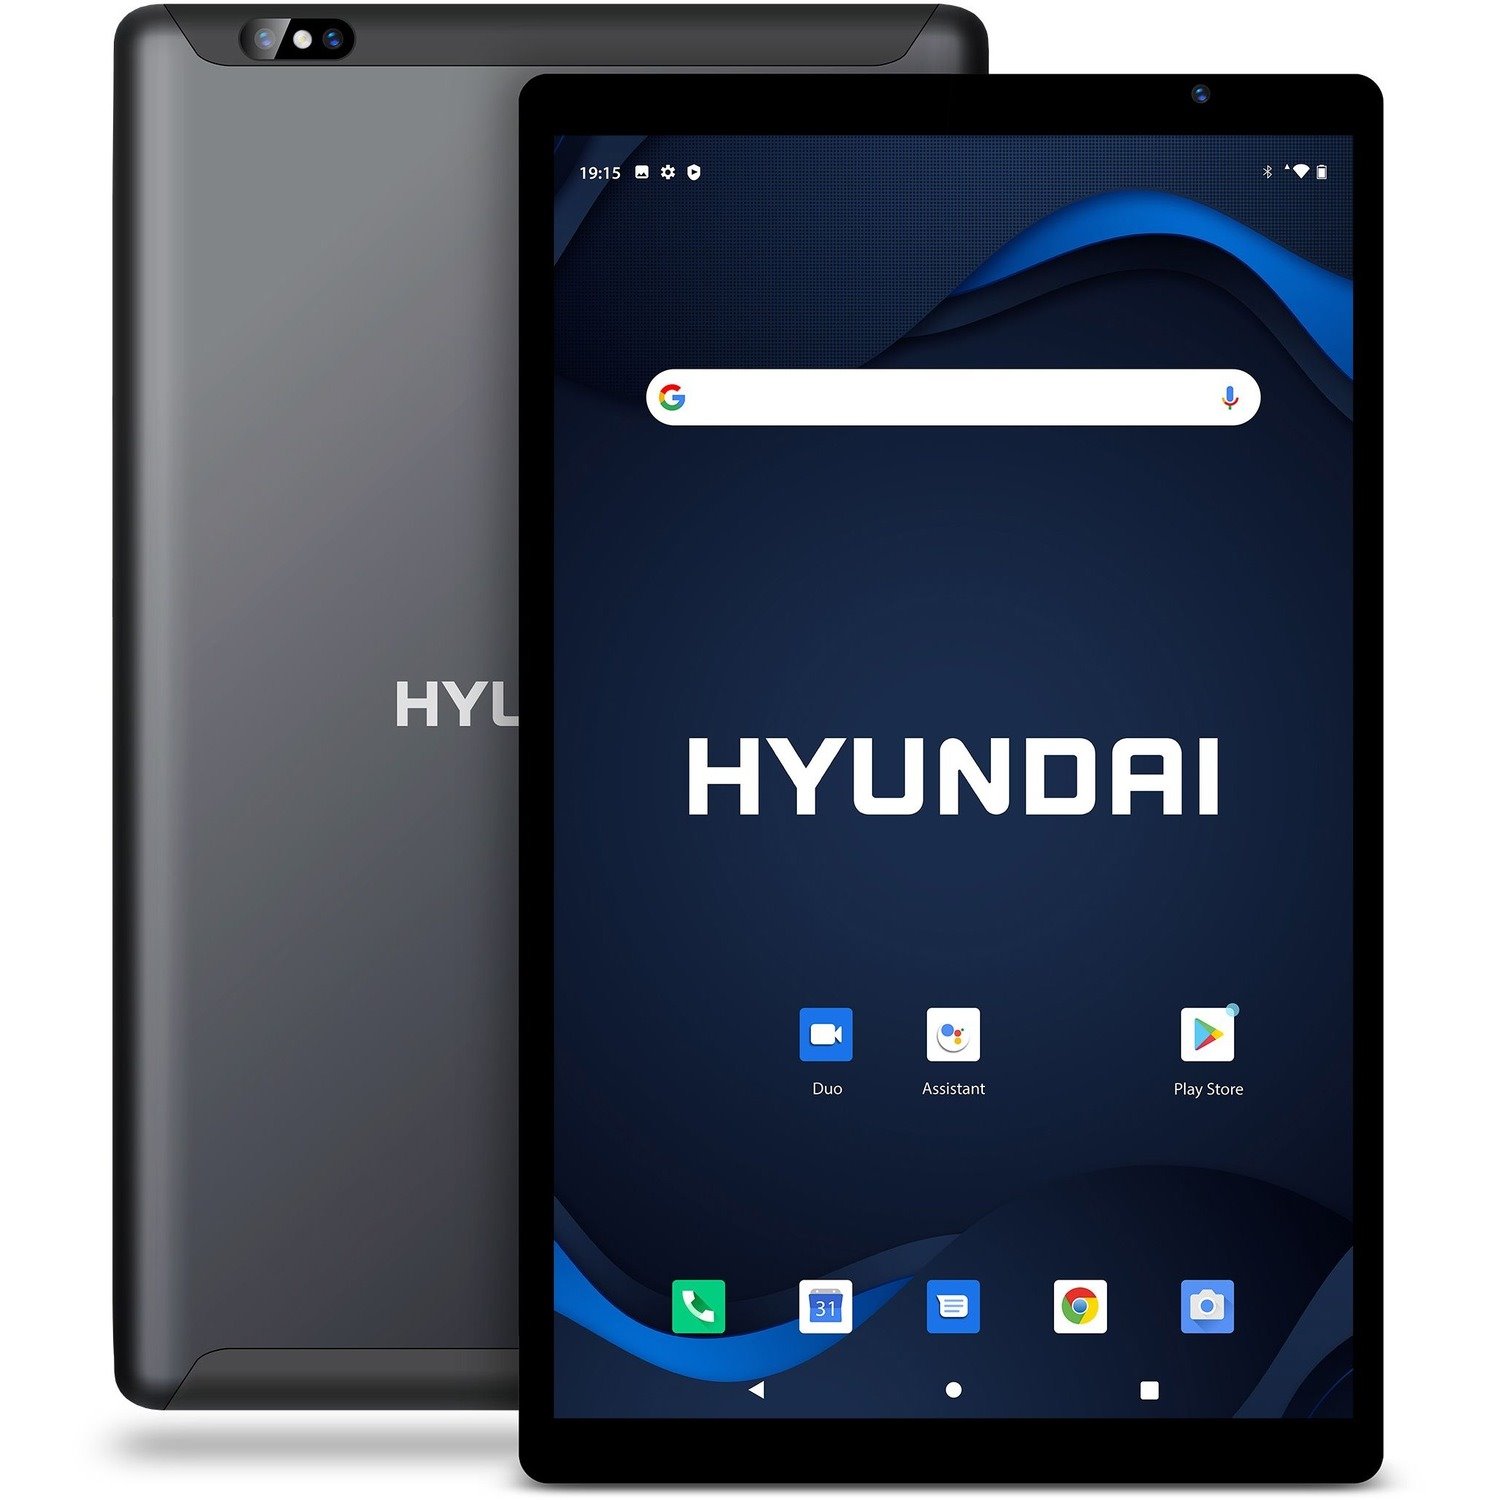 Hyundai HyTab Plus 10WB1, 10.1" Tablet, 1280x800 HD IPS, Android 10 Go edition, Quad-Core Processor, 2GB RAM, 32GB Storage, 2MP/5MP, WIFI - Space Grey